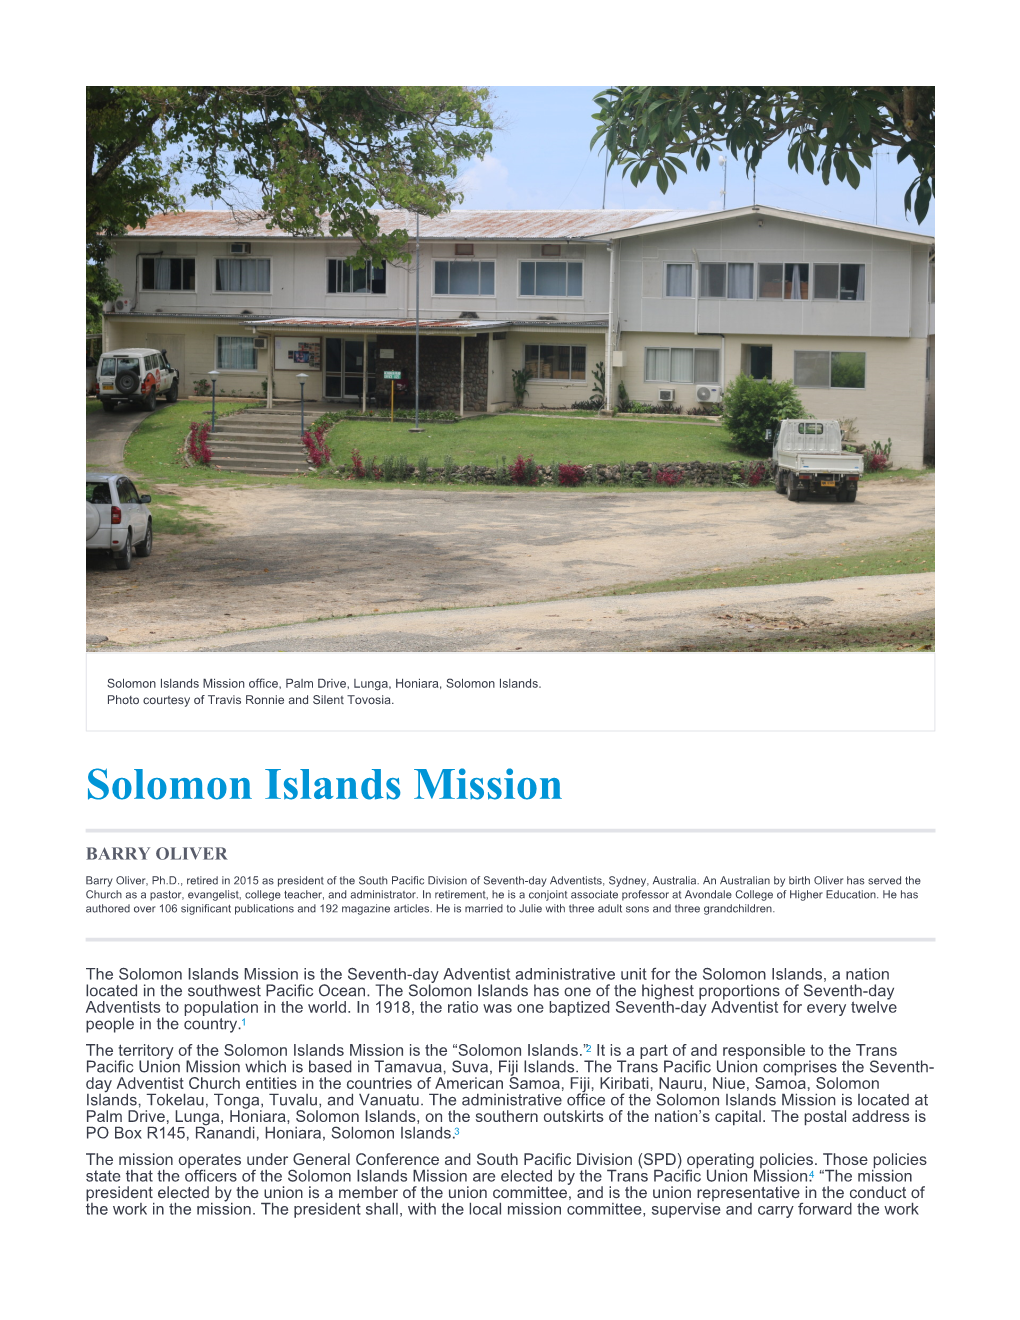 Solomon Islands Mission Office, Palm Drive, Lunga, Honiara, Solomon Islands